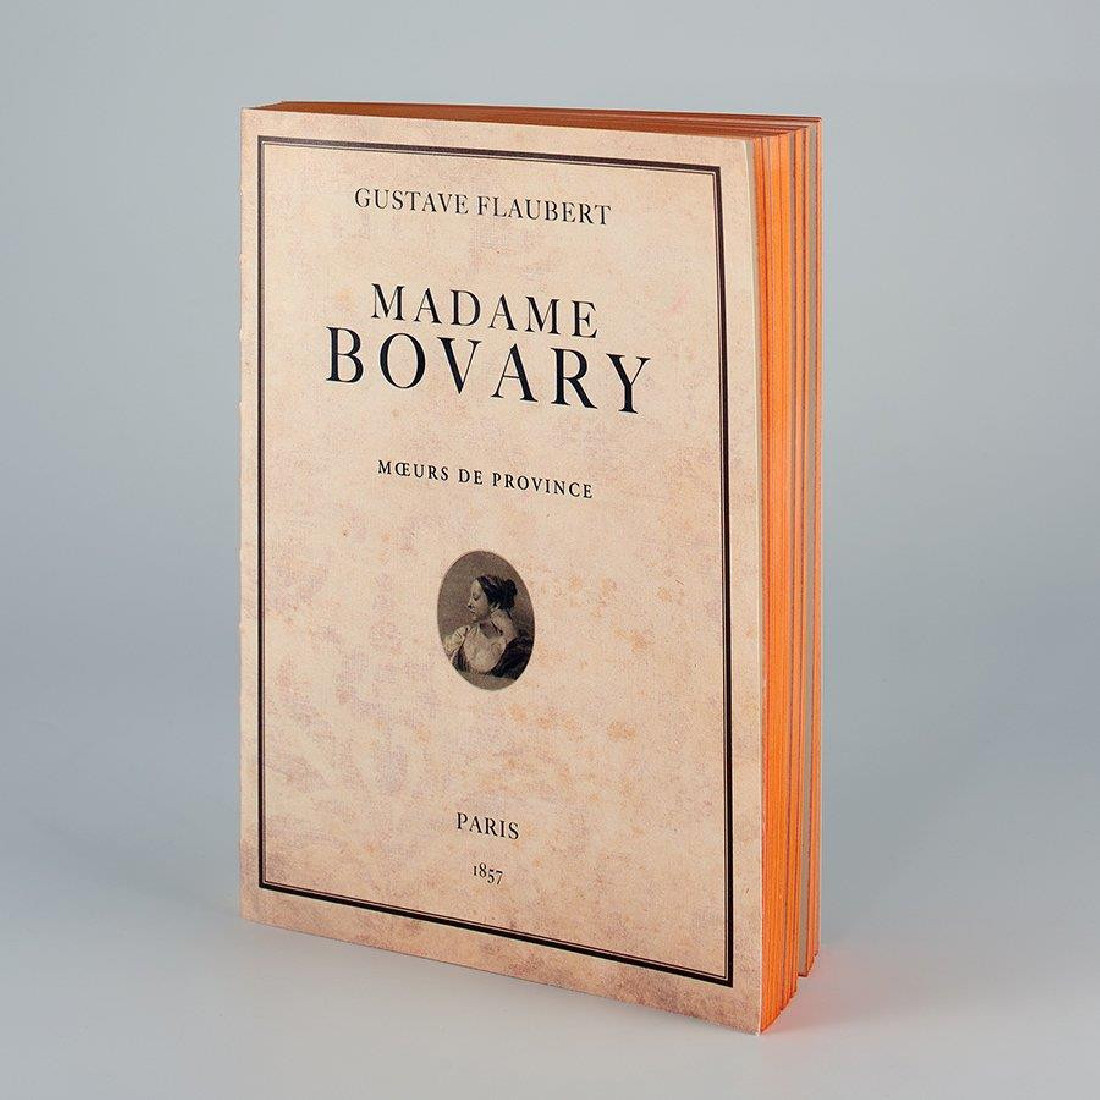 ANTIQUE NOTEBOOK Madame Bovary LIBRI MUTI